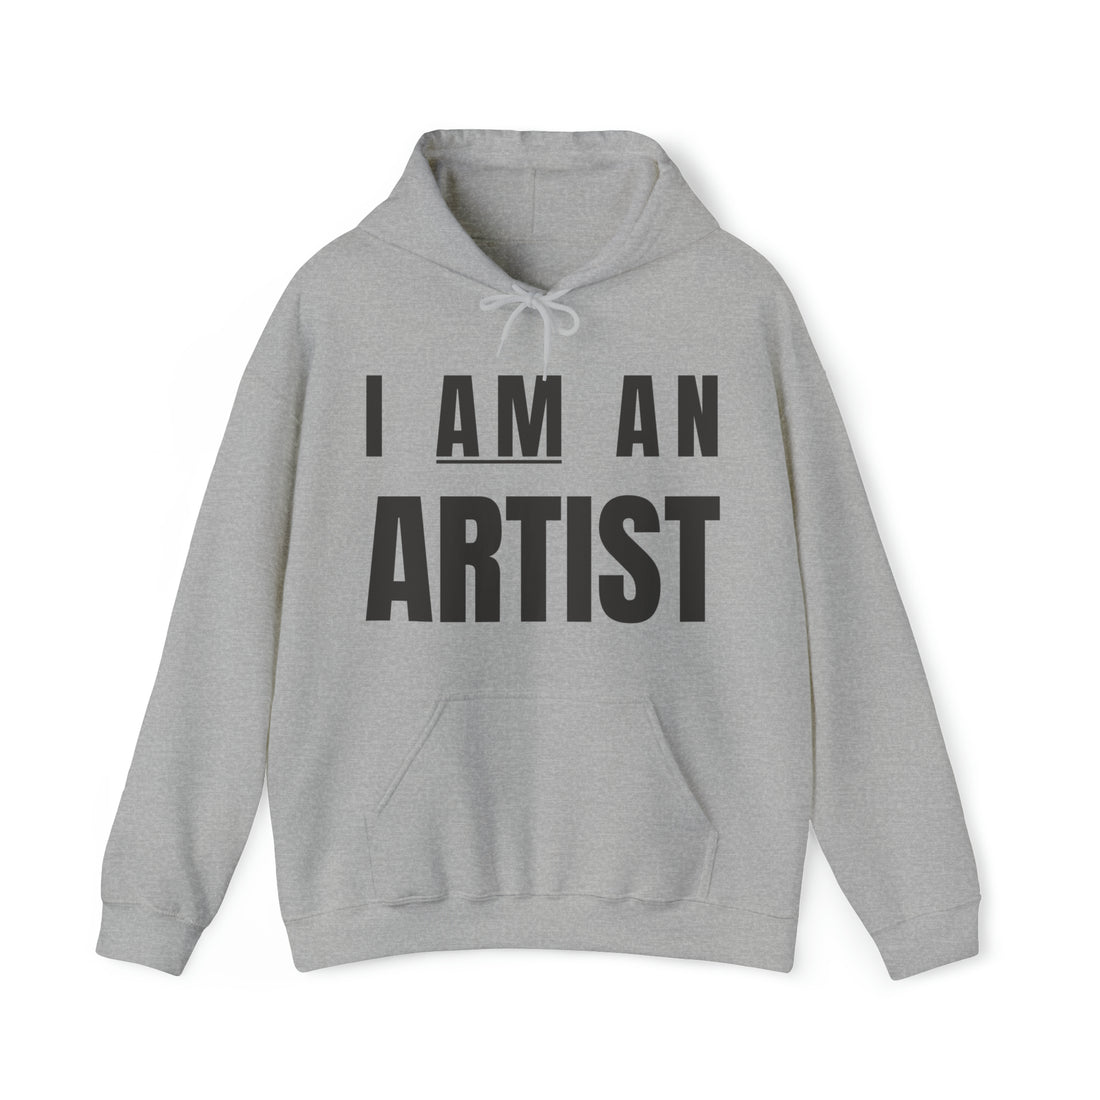 I AM AN ARTIST Hoodie, Unisex Heavy Hooded Sweatshirt